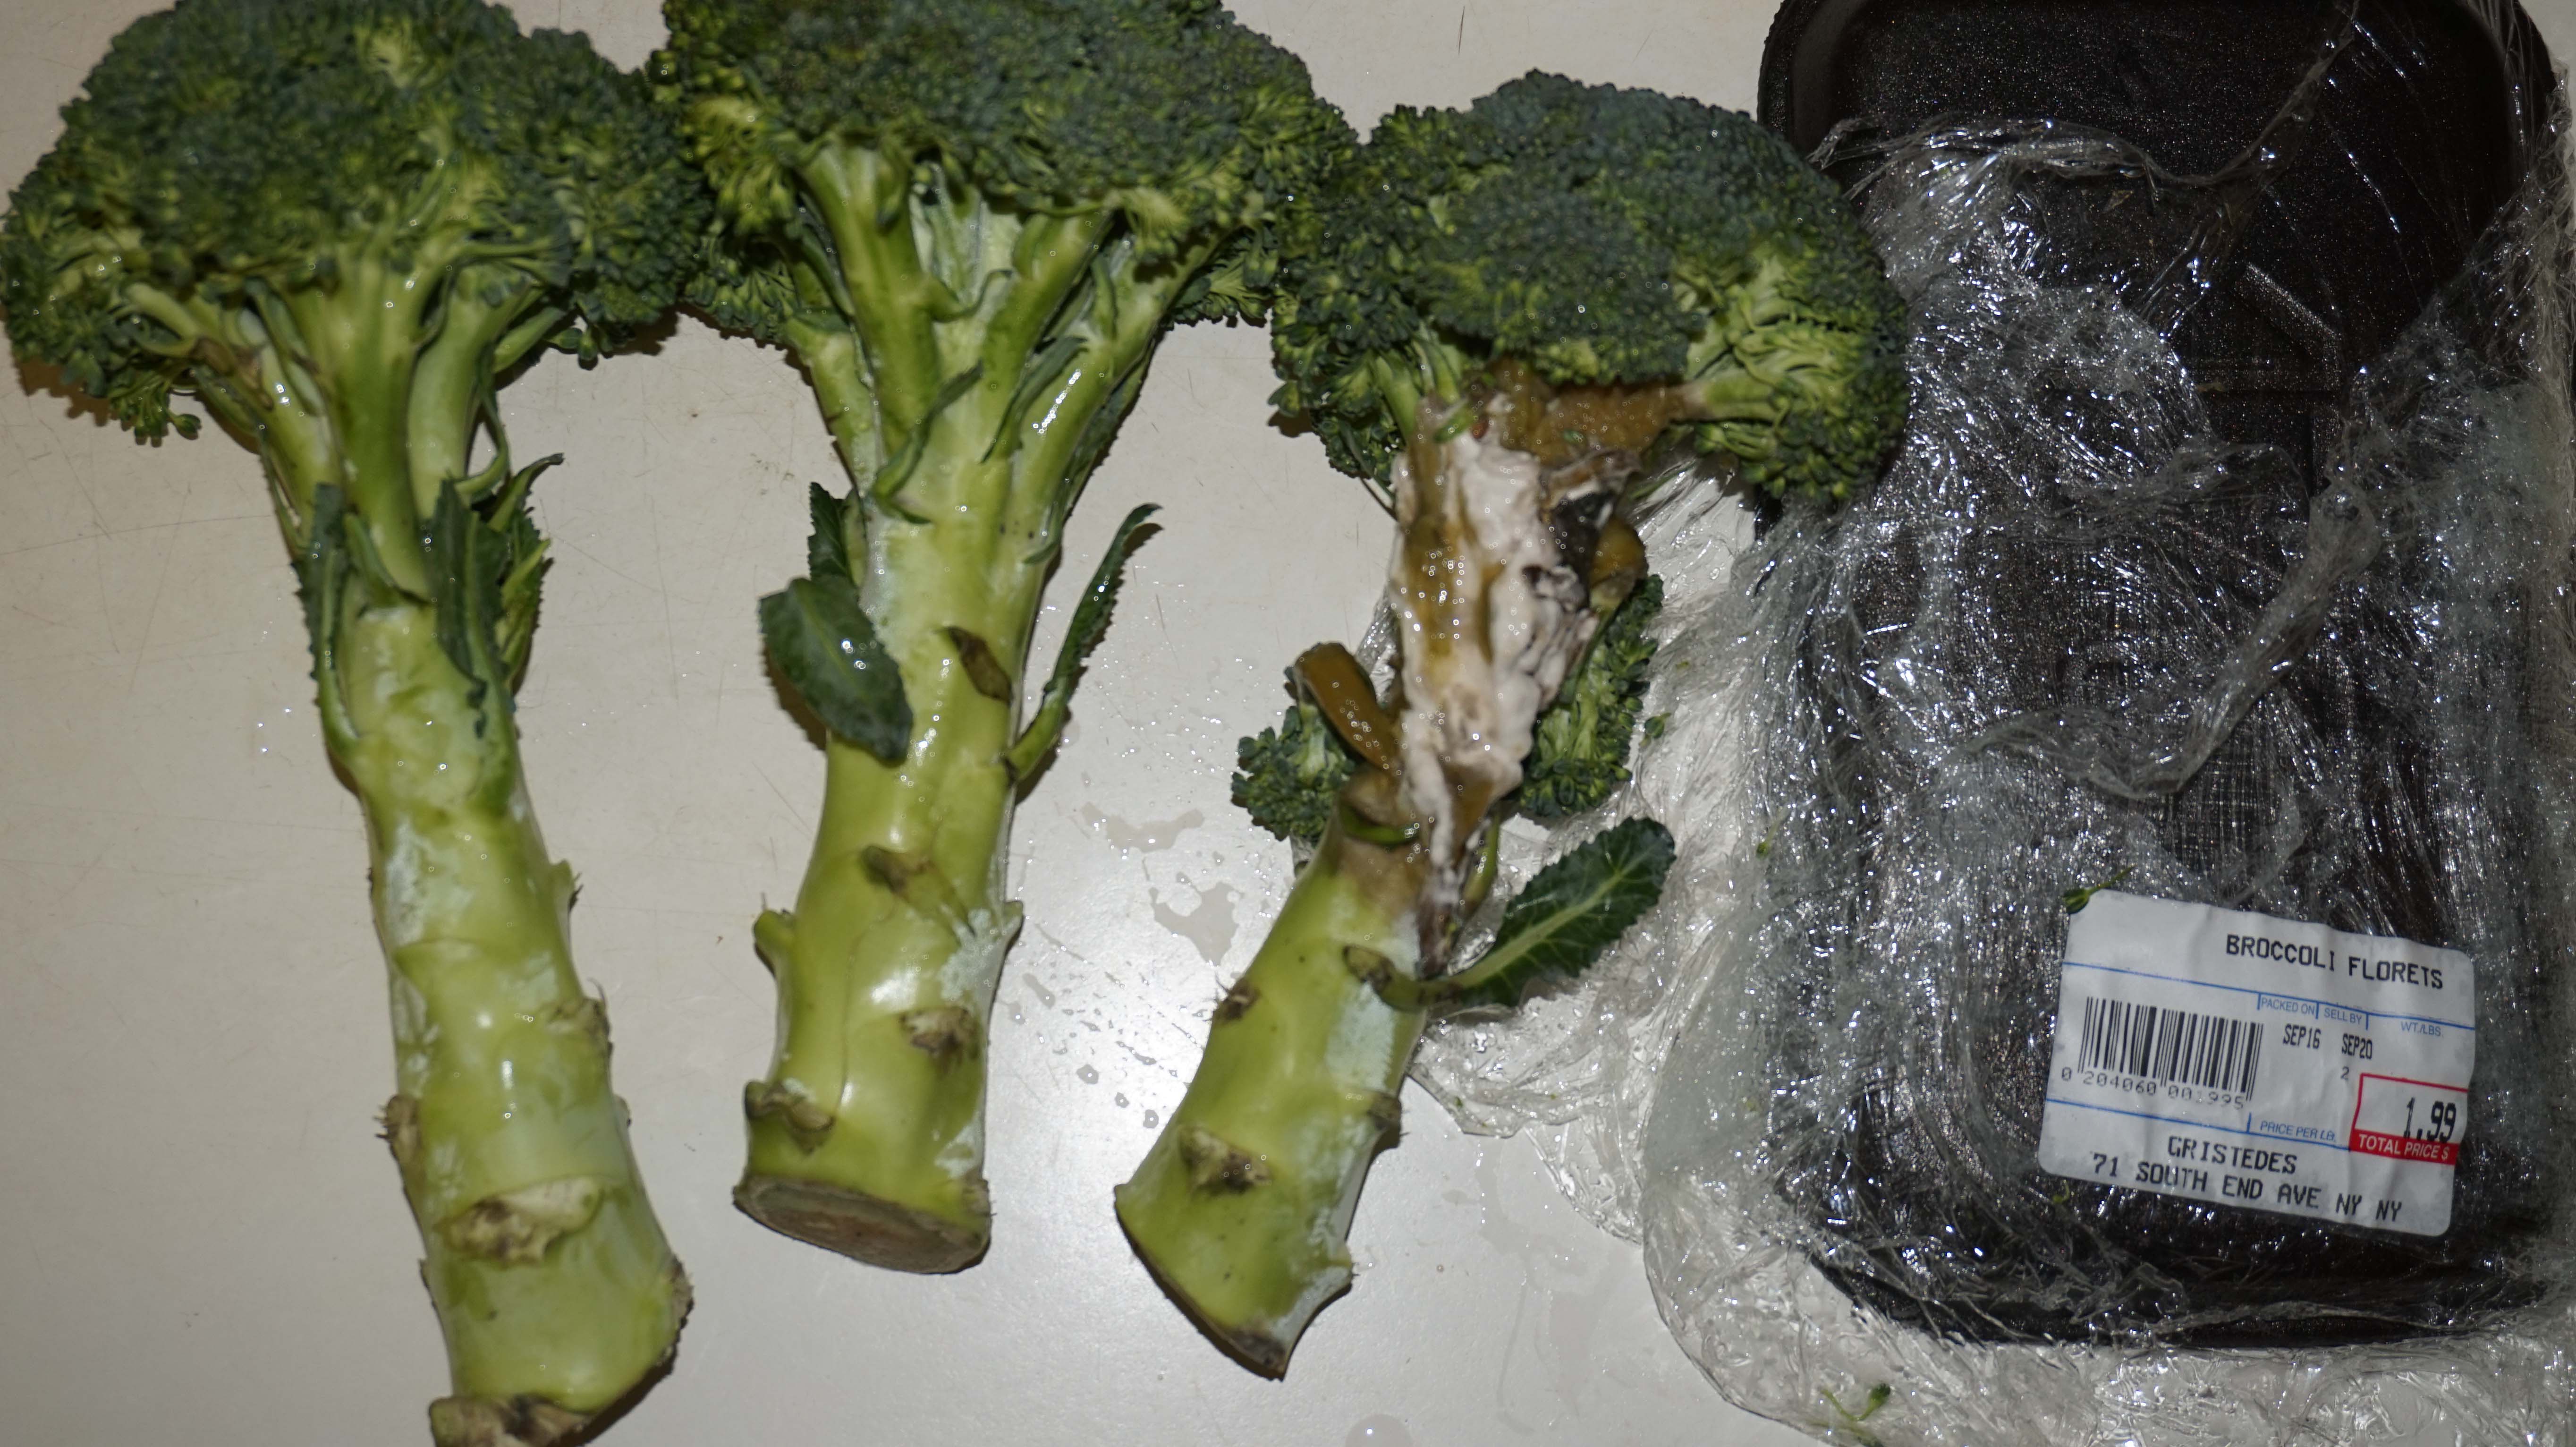 Moldy-Gristedes-broccoli-9-22-2014-low.jpg